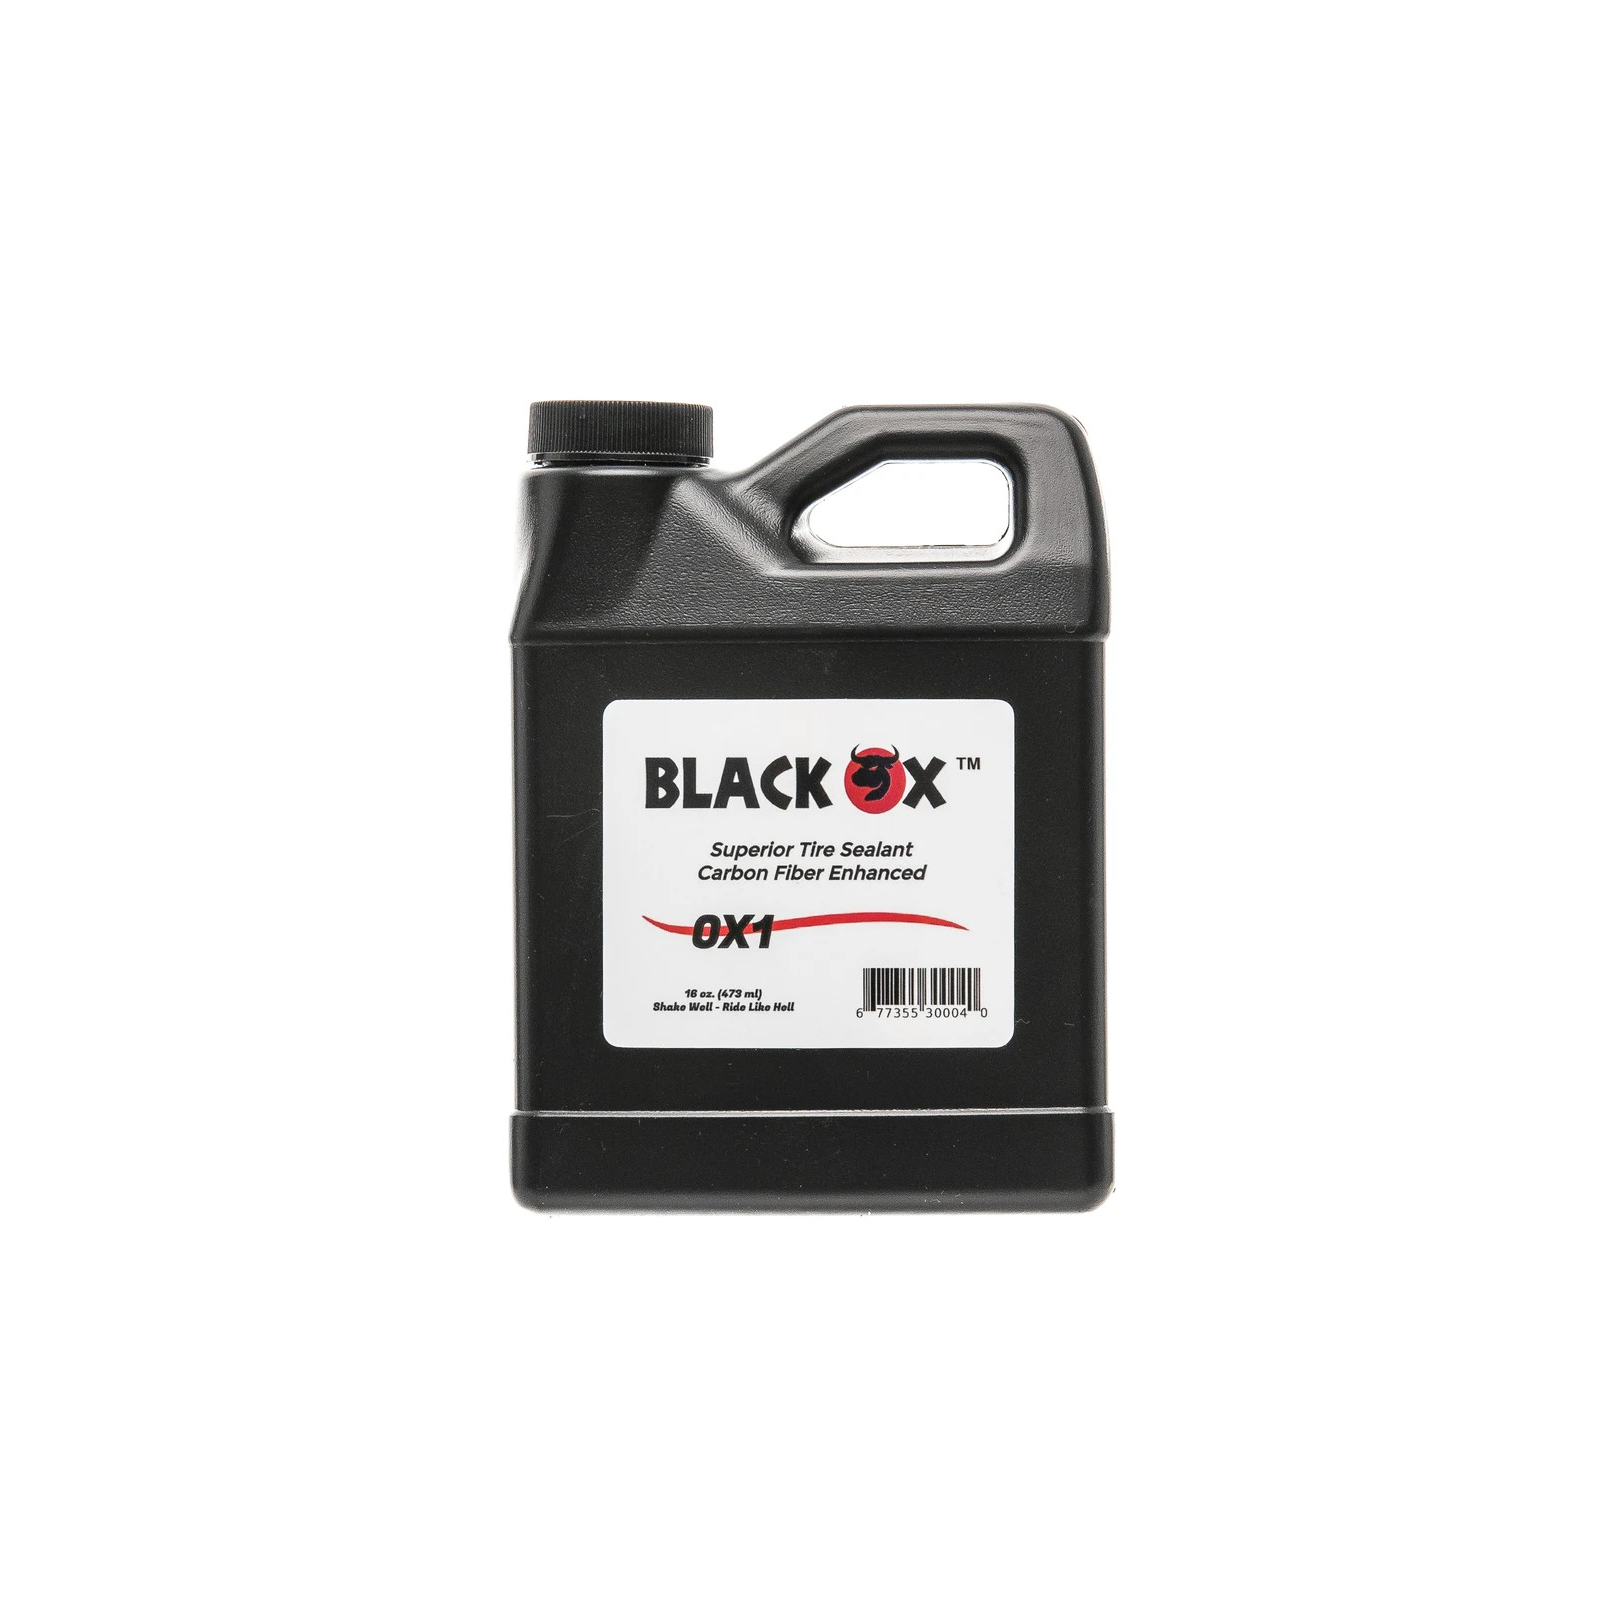 Black Ox OX1 - Tire Sealant, 16oz